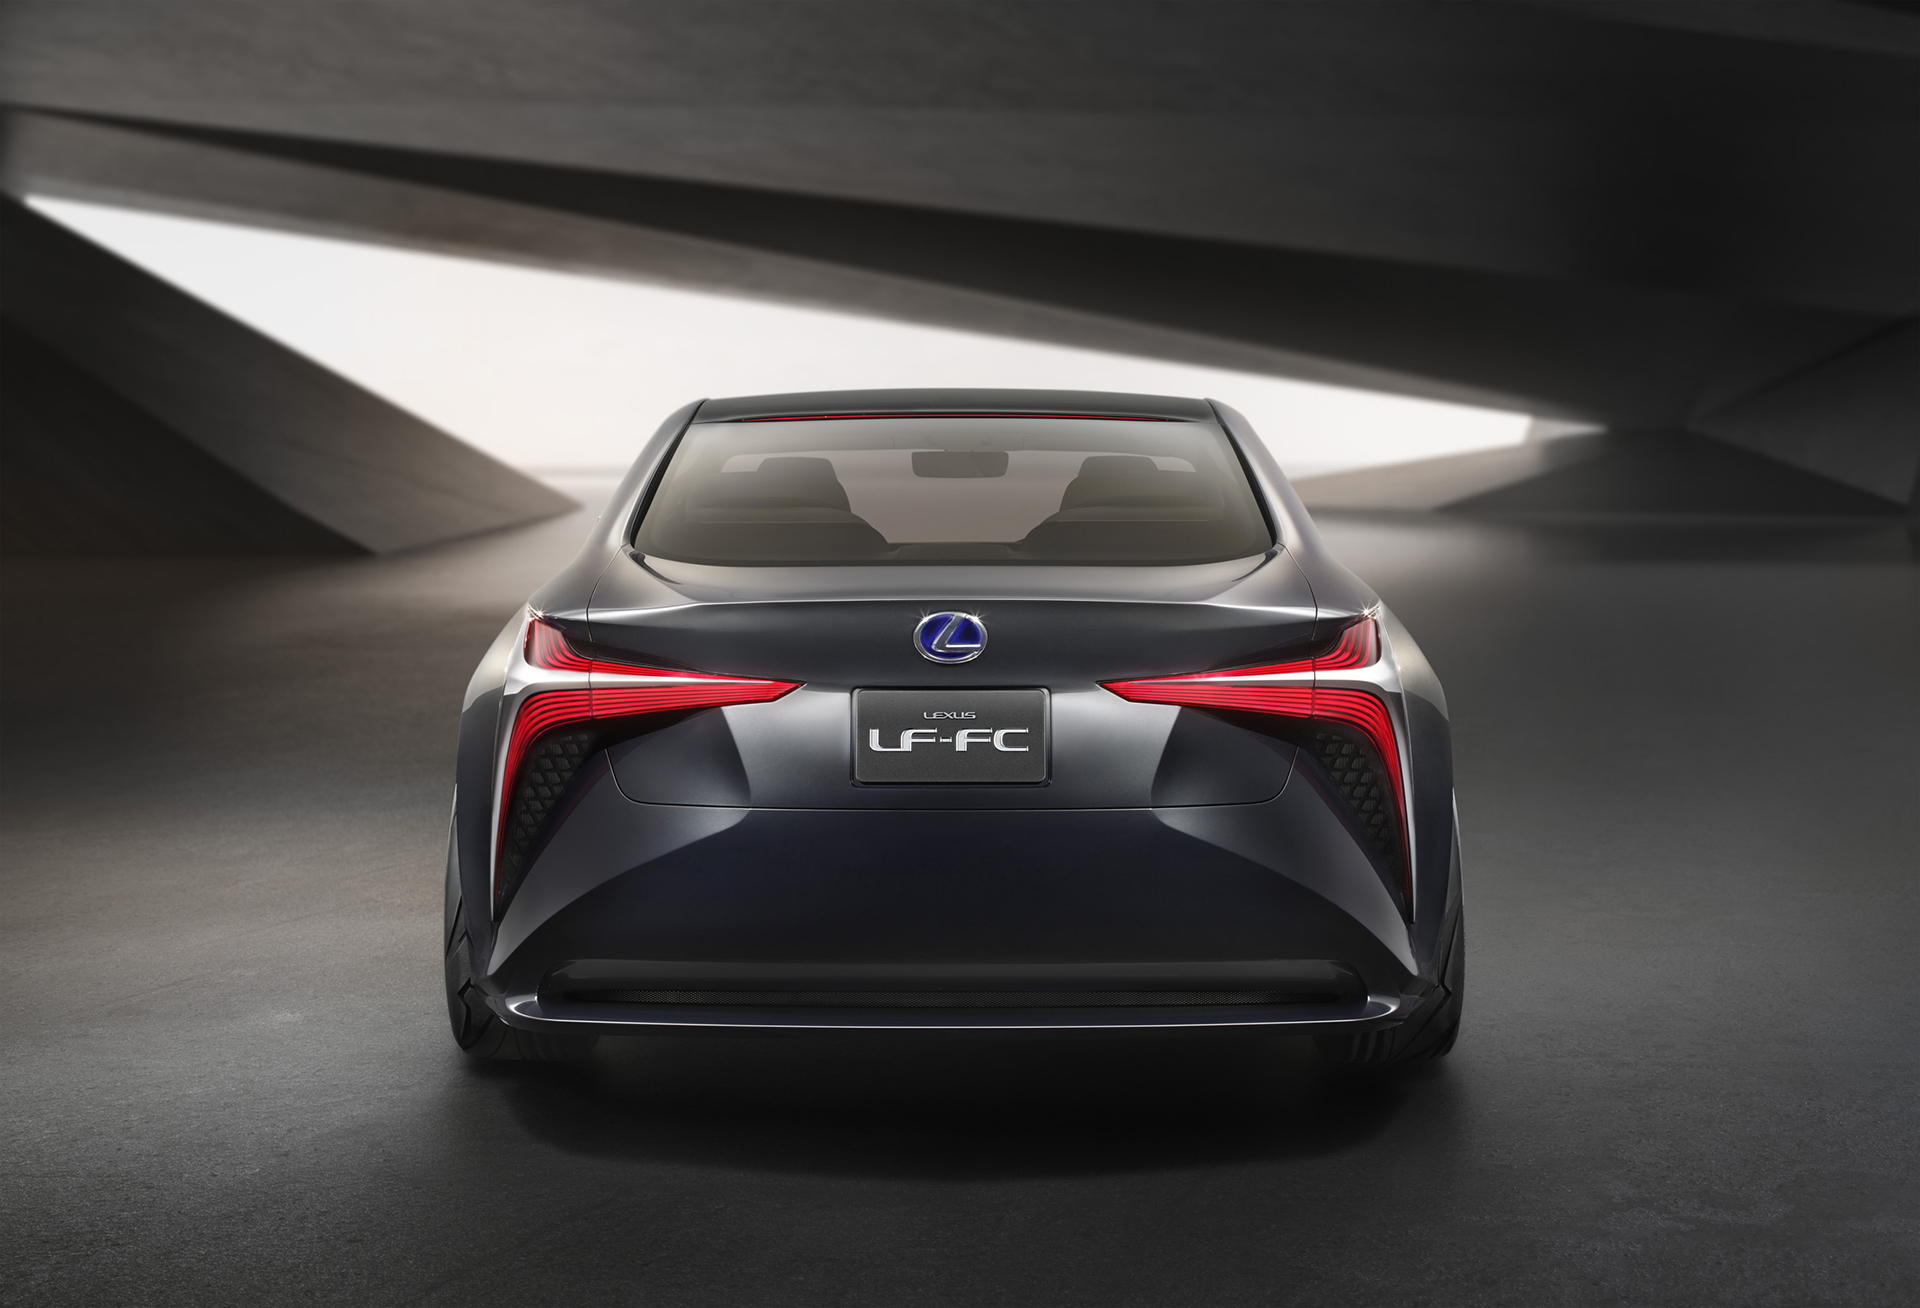 2016 Lexus LF-FC Concept (3)